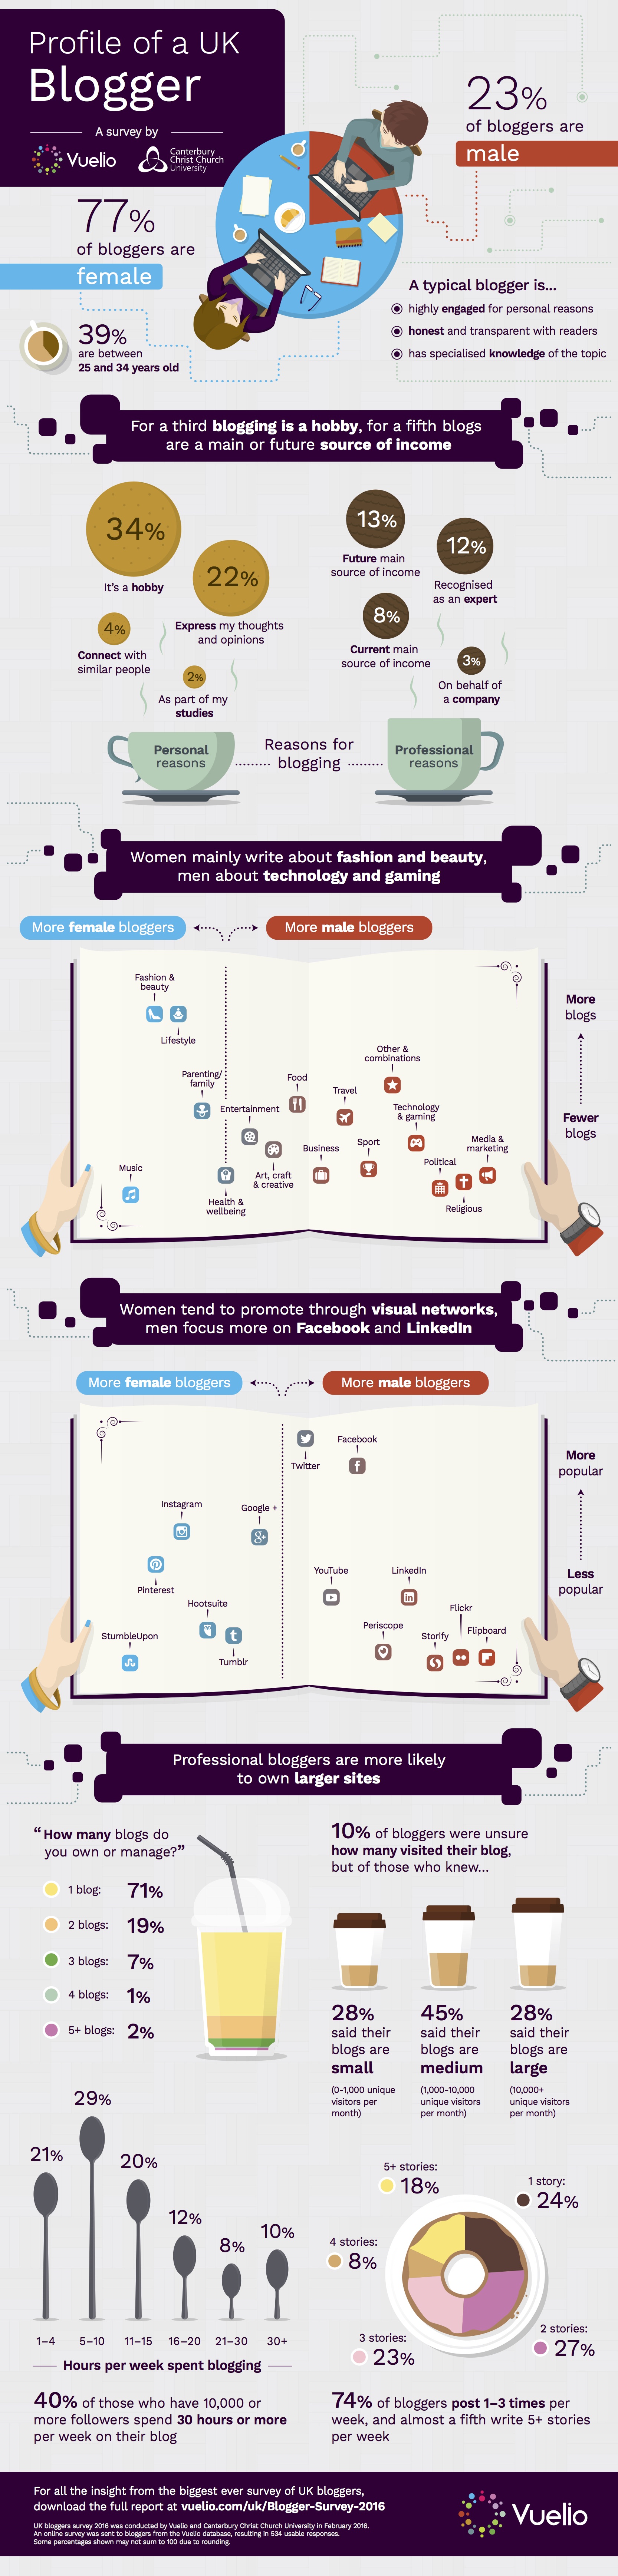 Vuelio Bloggers Survey - Blogger Profile Infographic[1]